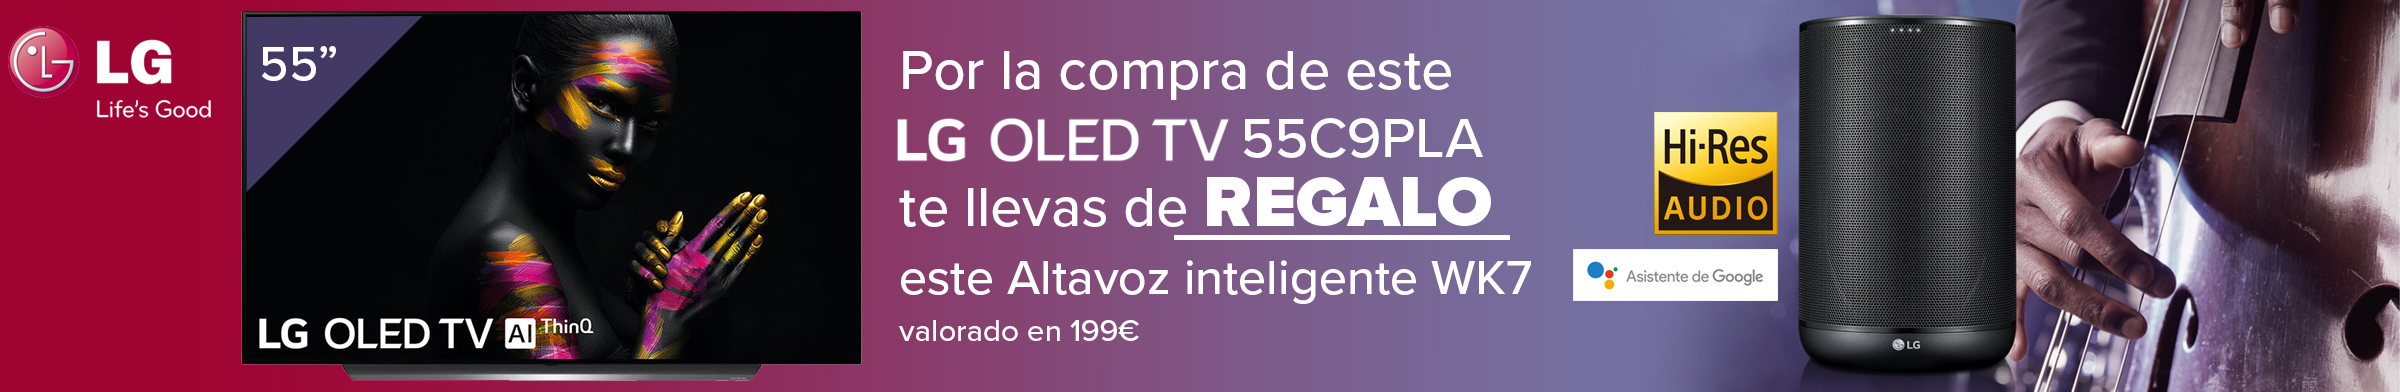 LG OLED TV + Altavoz inteligente de REGALO